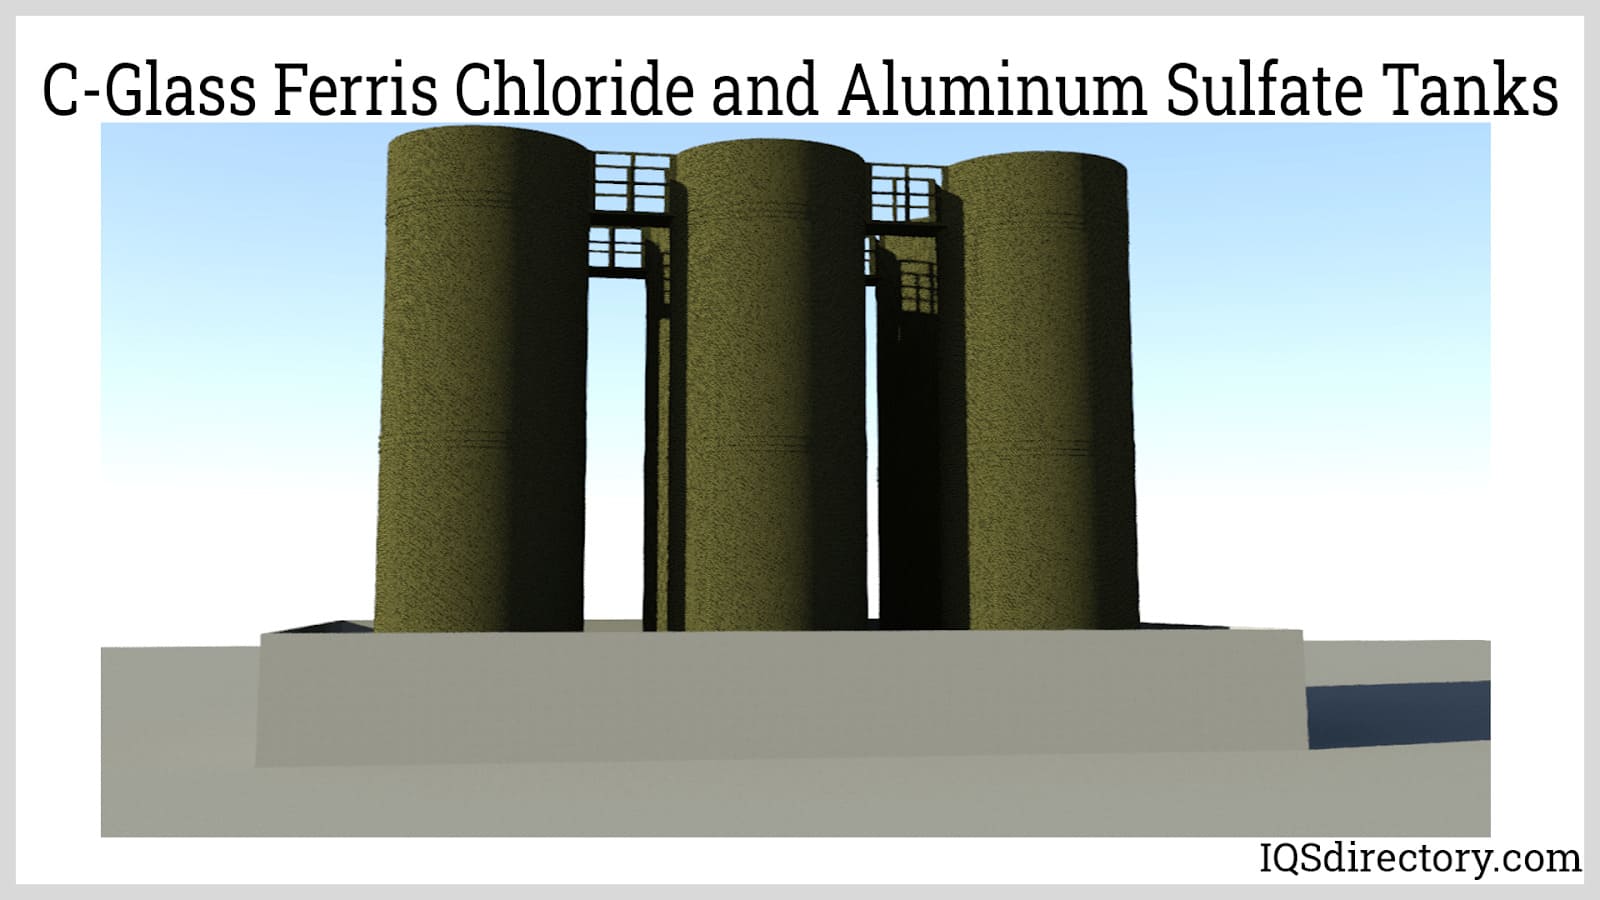 C-Glass Ferris Chloride and Aluminum Sulfate Tanks